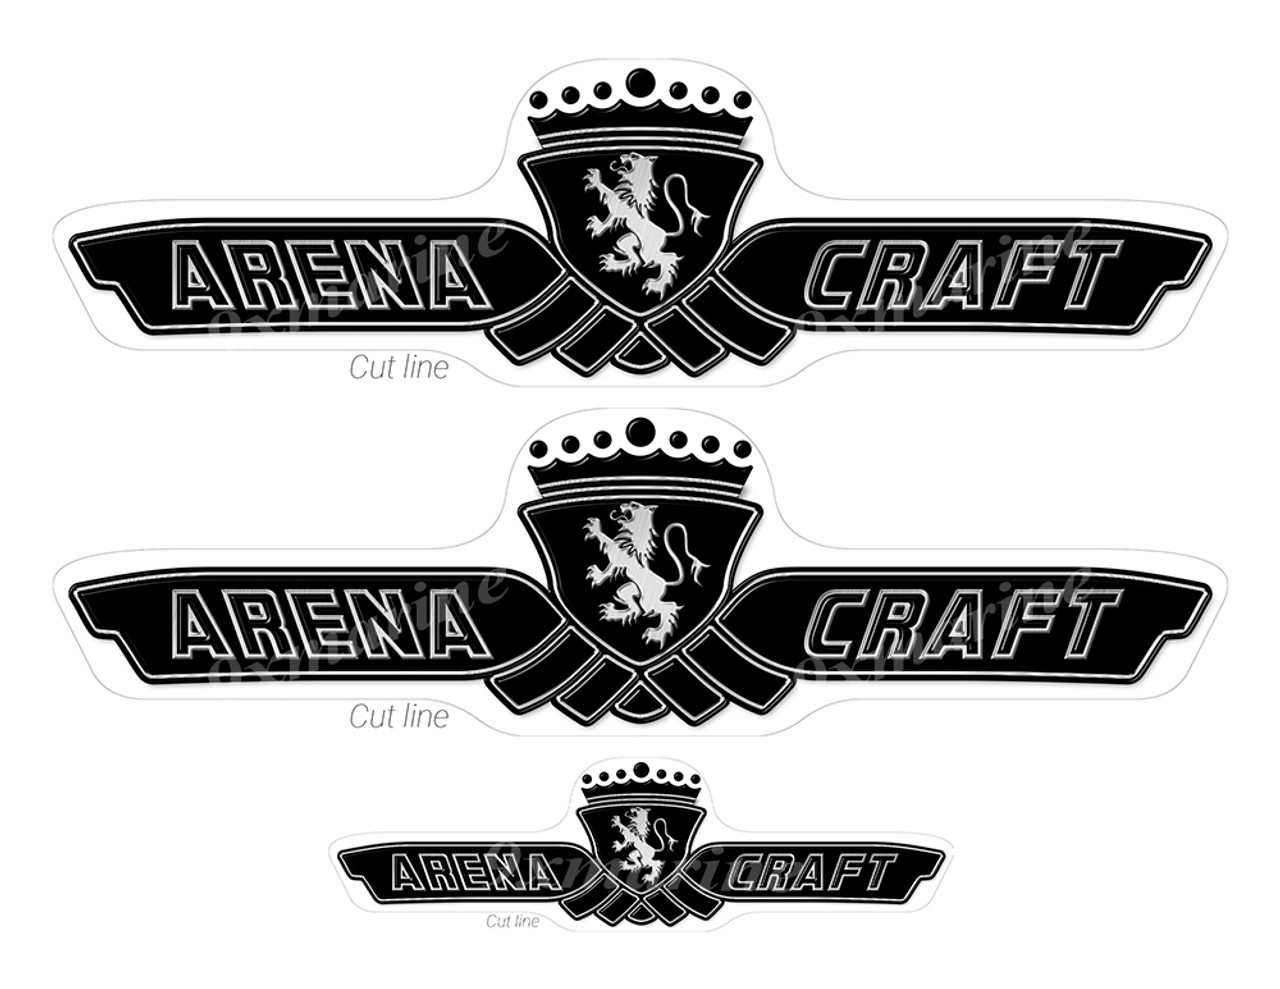 3 Arena Craft Boat Stickers "3D Vinyl Replica" of original